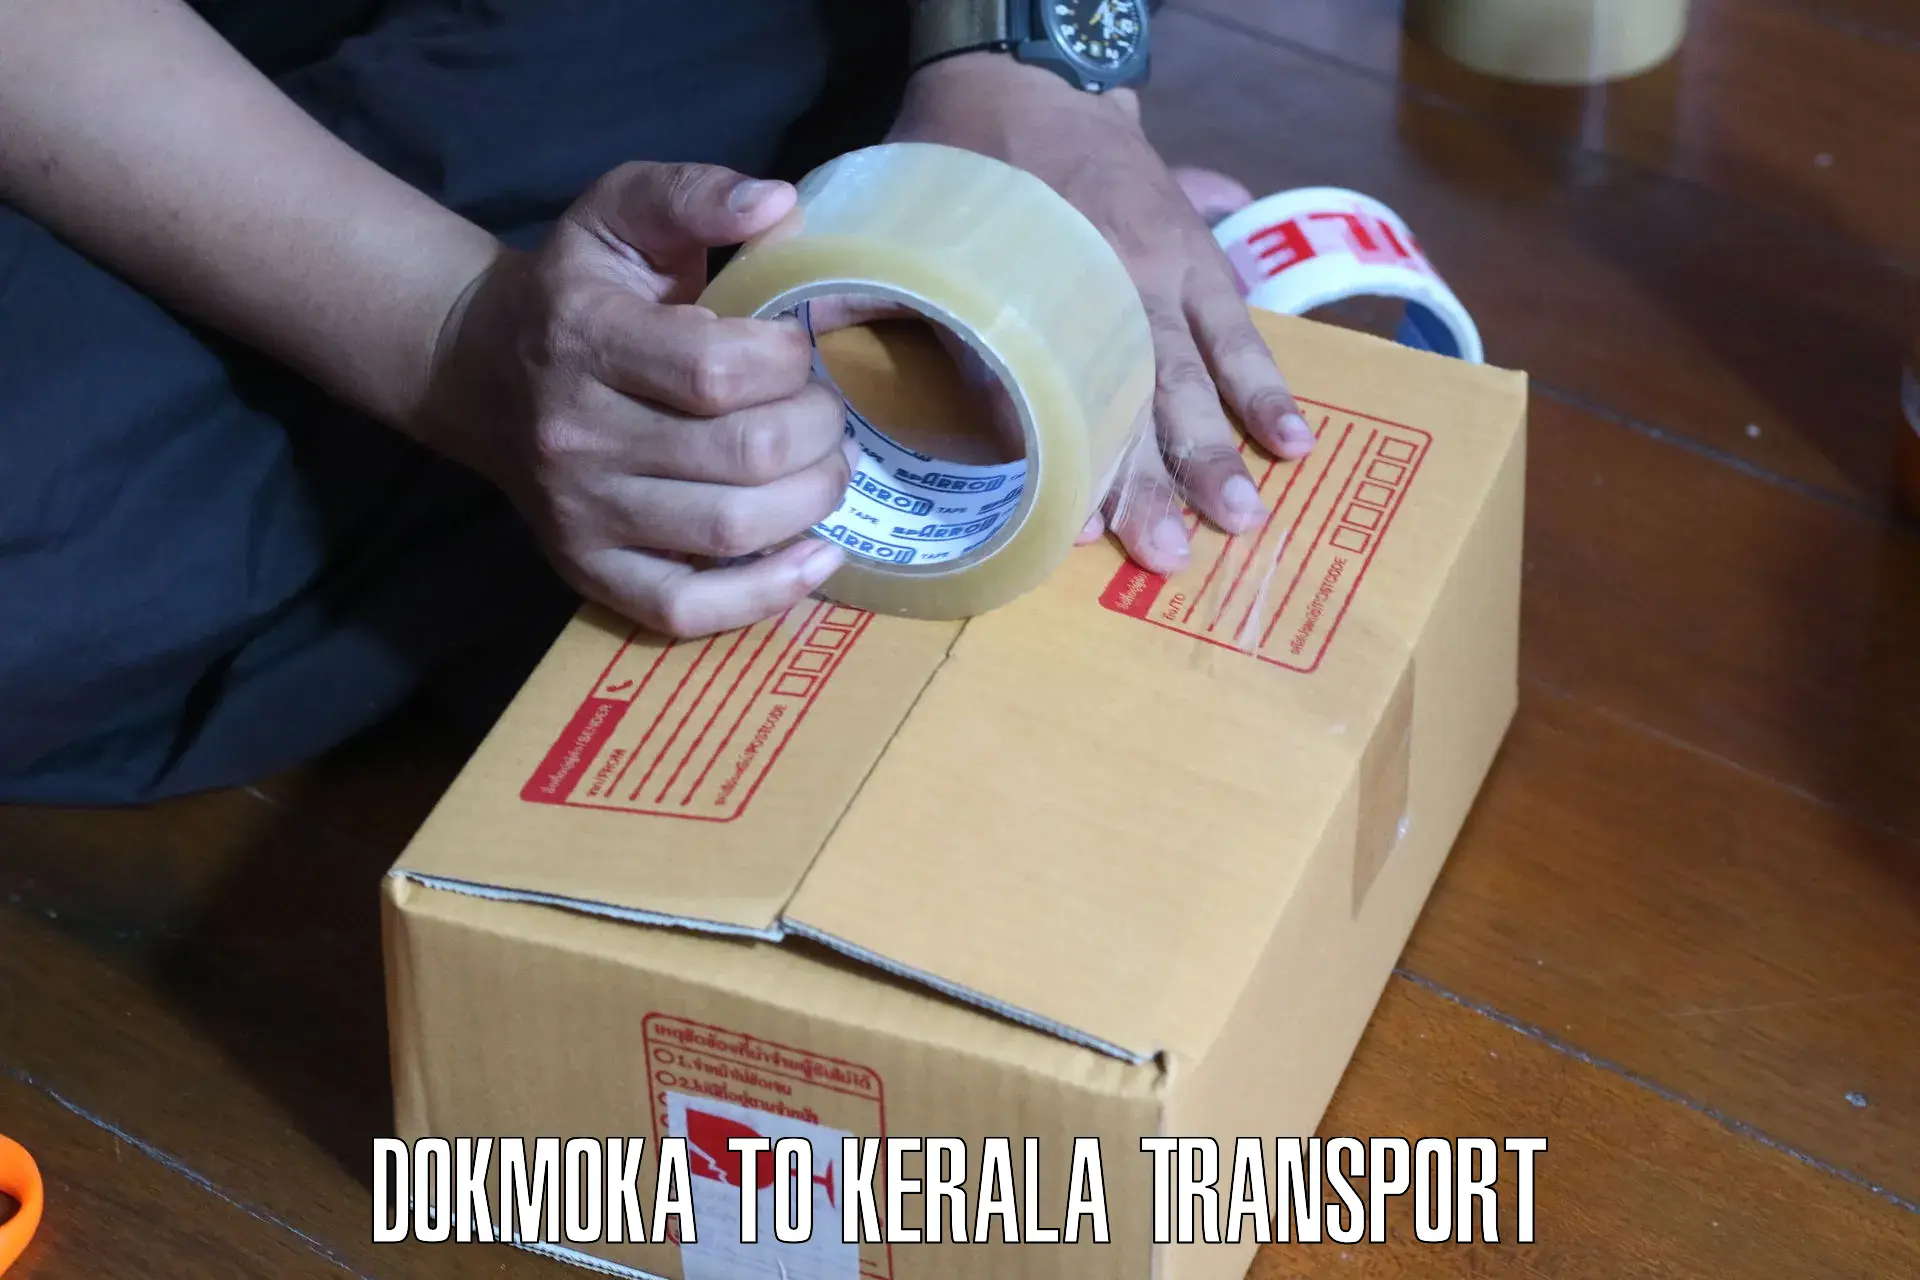 Transport in sharing Dokmoka to Cochin Port Kochi